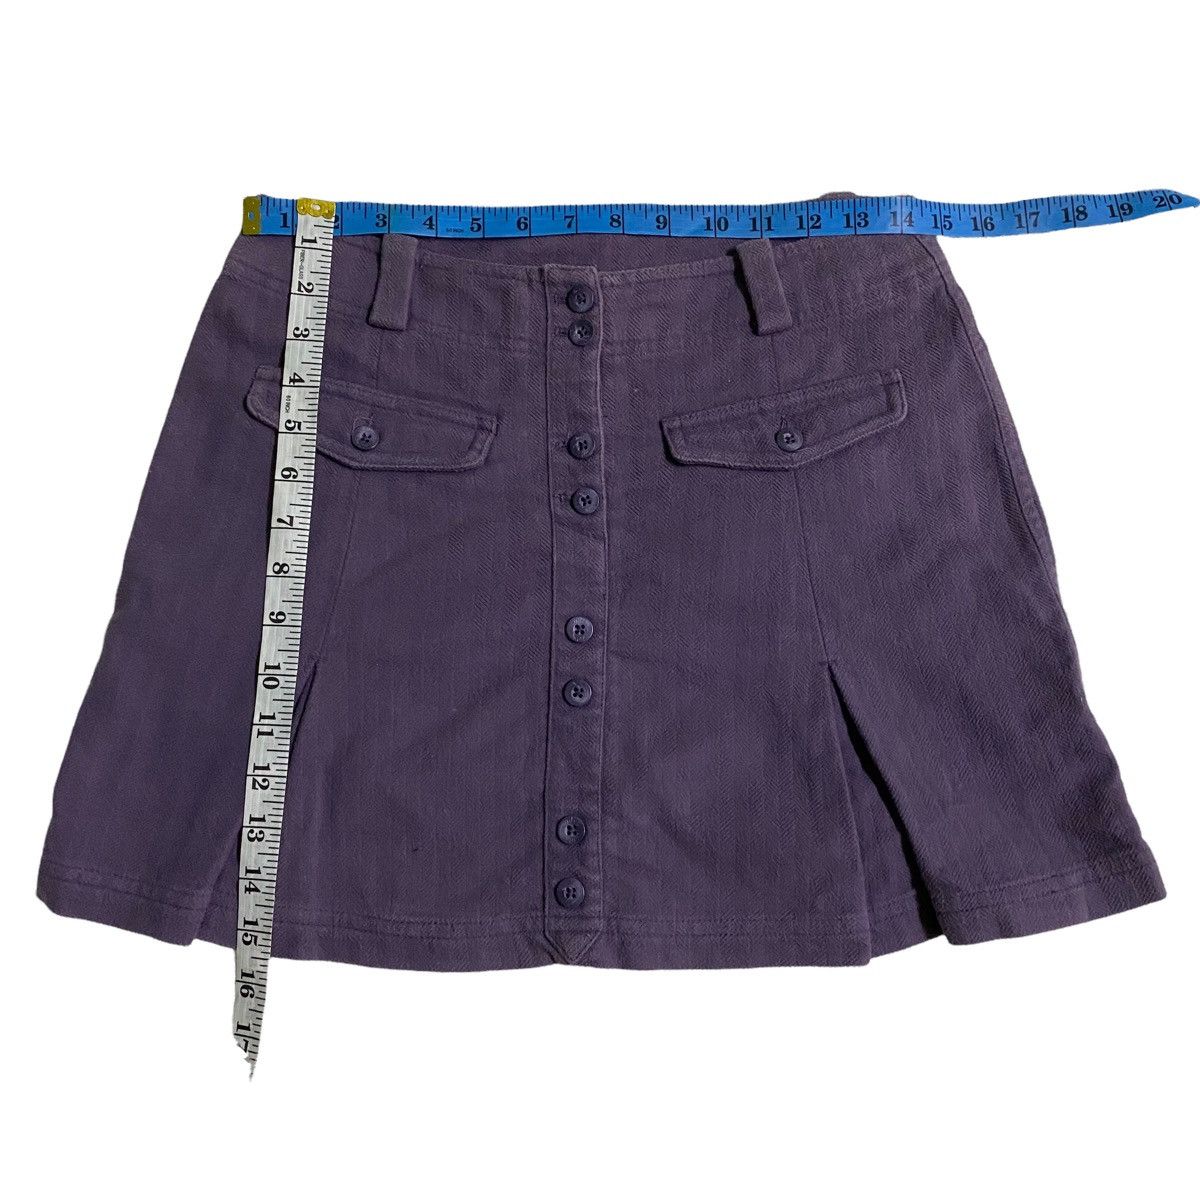 Vintage Nike Golf Skirt Size 2 Purple Colour - 11